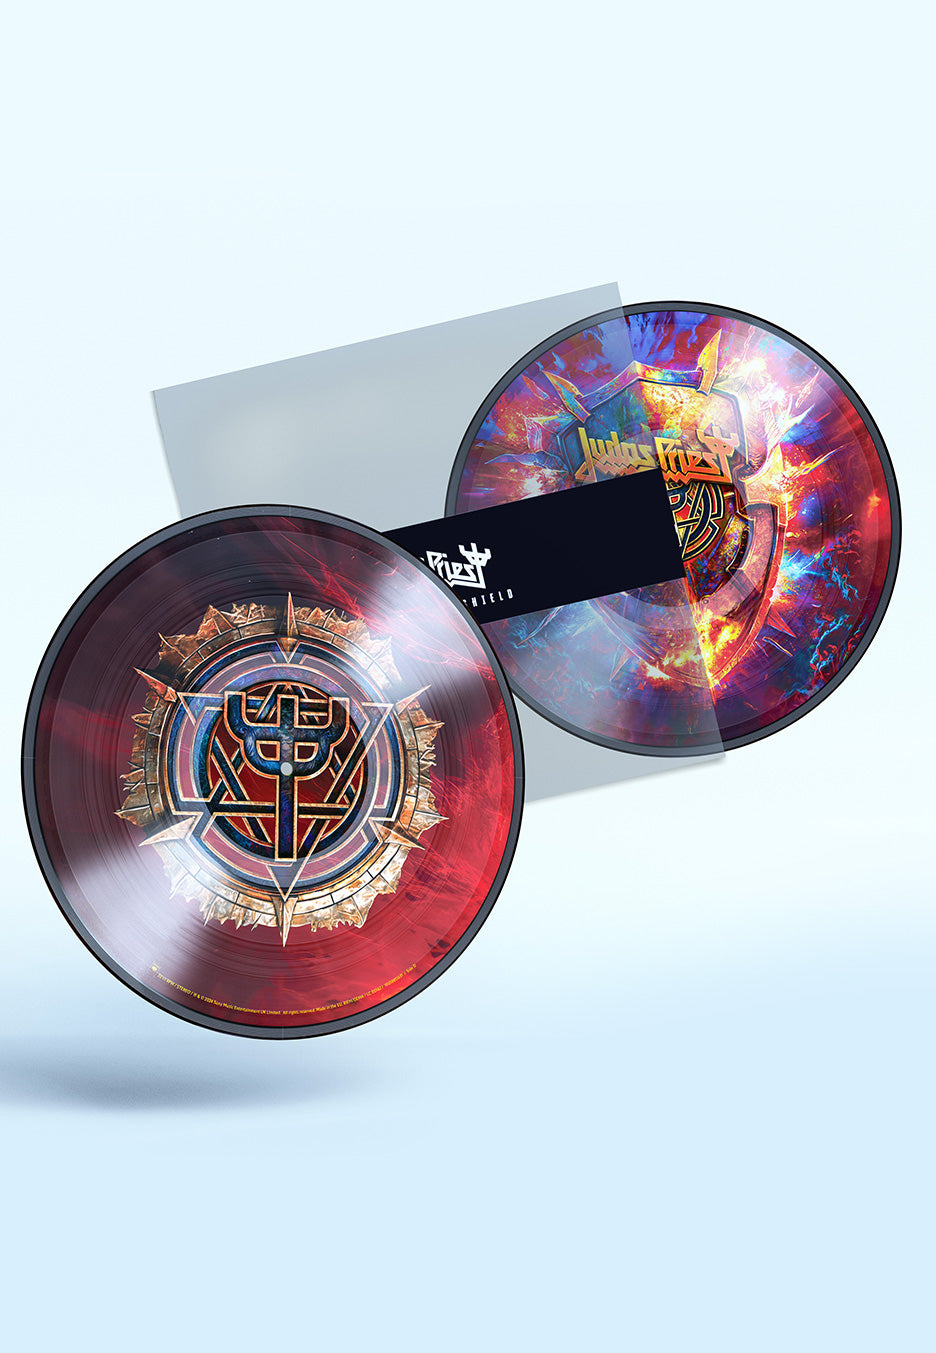 Judas Priest - Invincible Shield Ltd. Picture - Picture 2 Vinyl